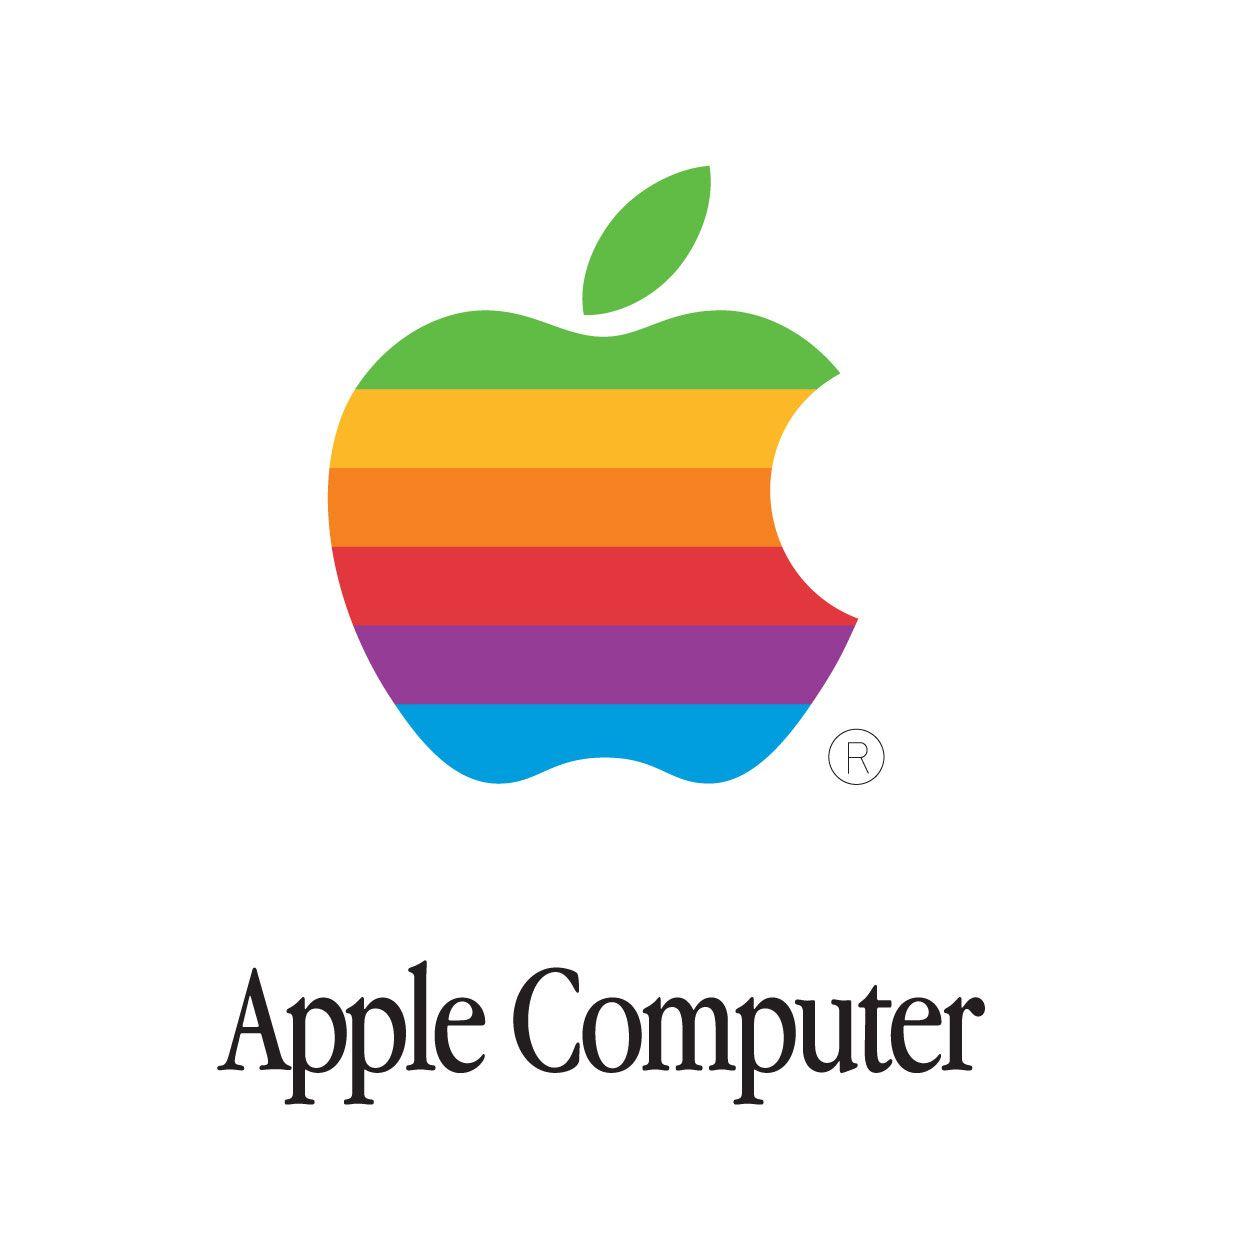 Apple Computer Logo - Old Apple Computer Logo Technology Geek